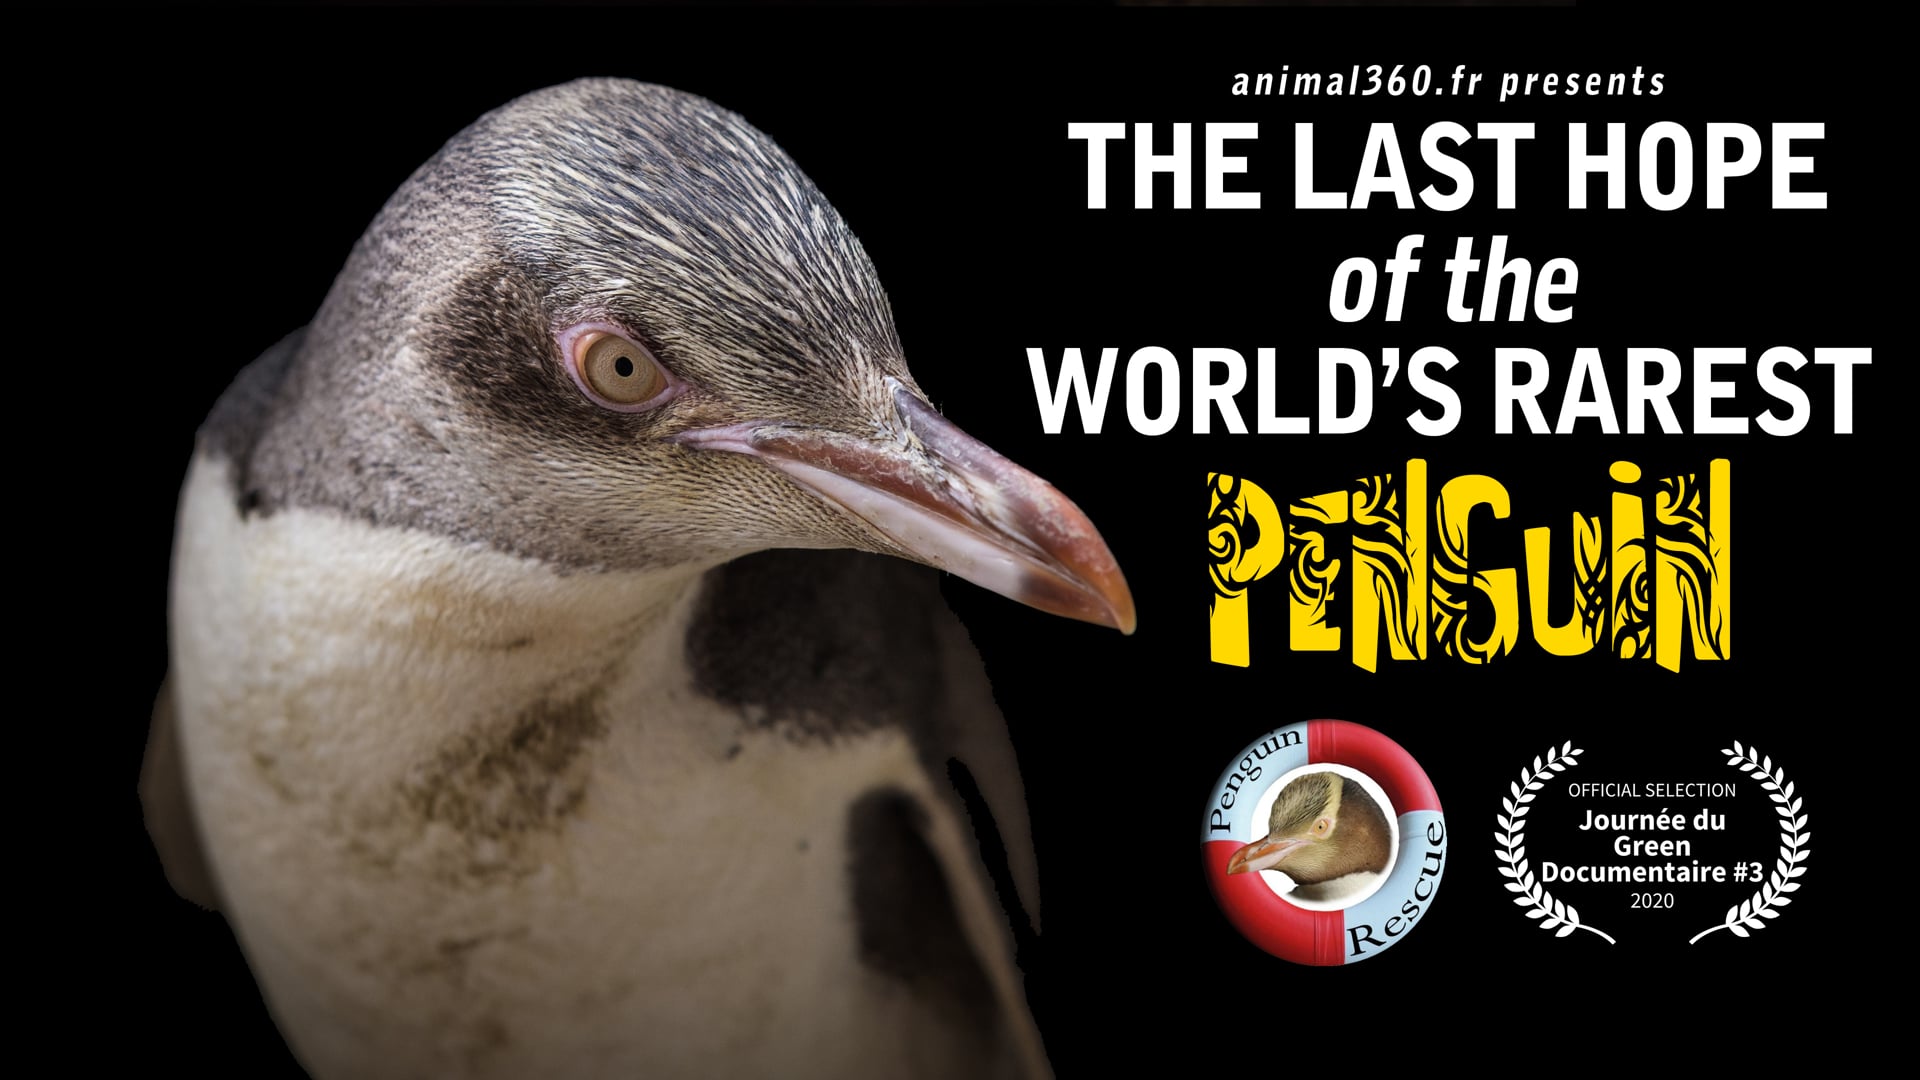 The last hope of the world's rarest penguin